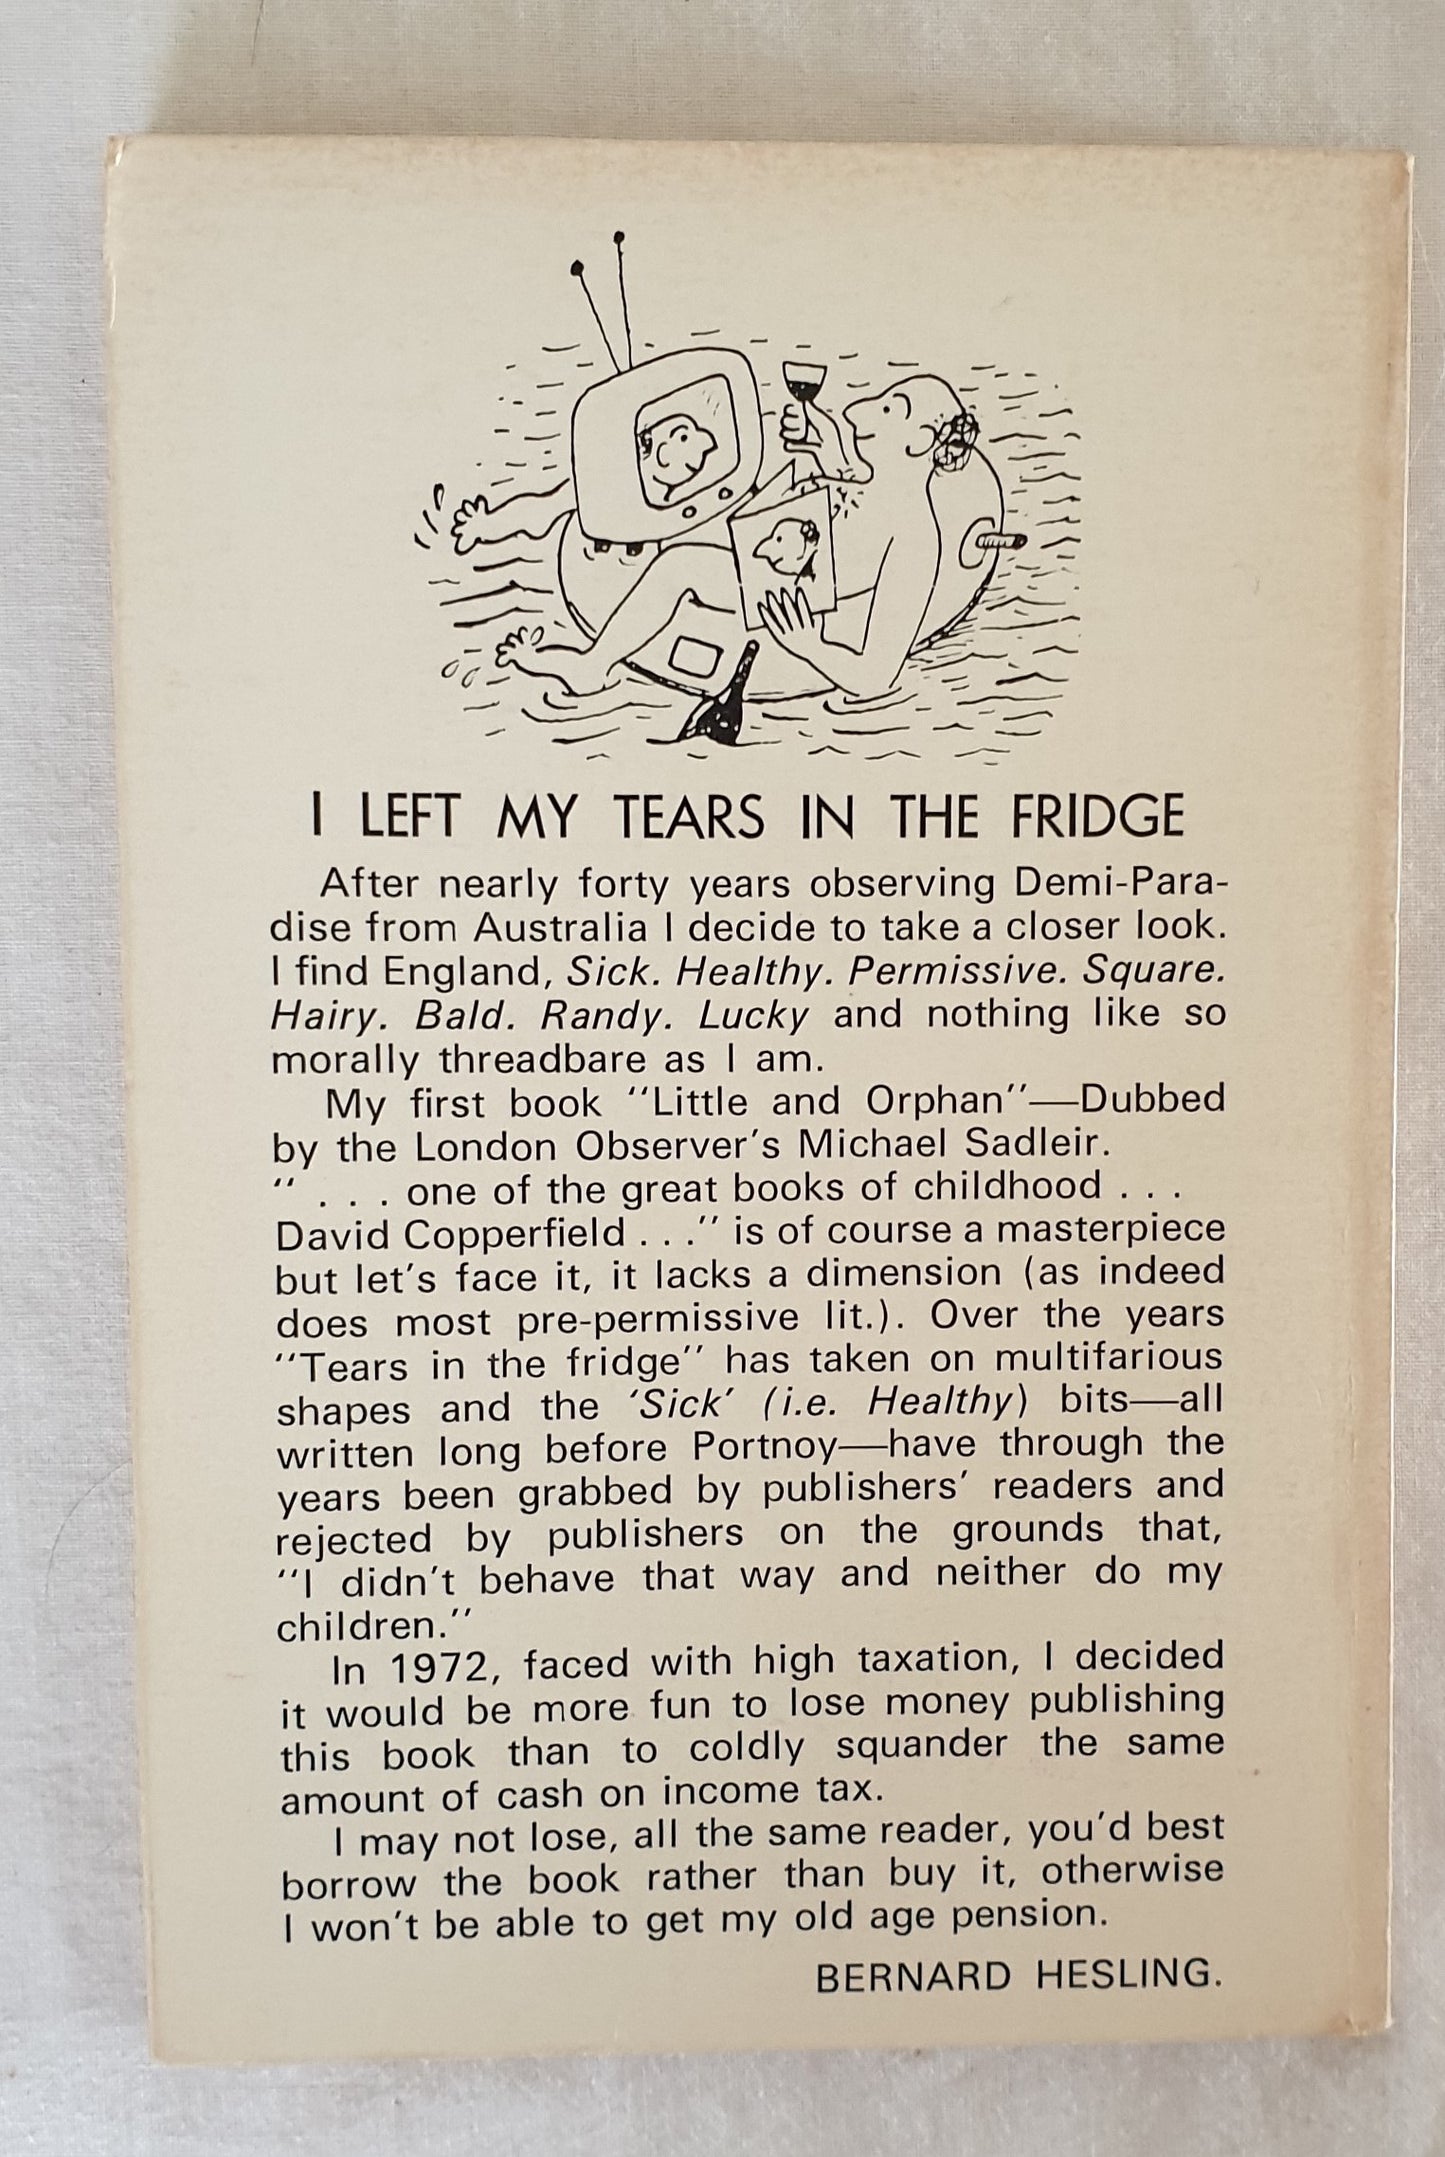 I Left My Tears in the Fridge by Bernard Hesling